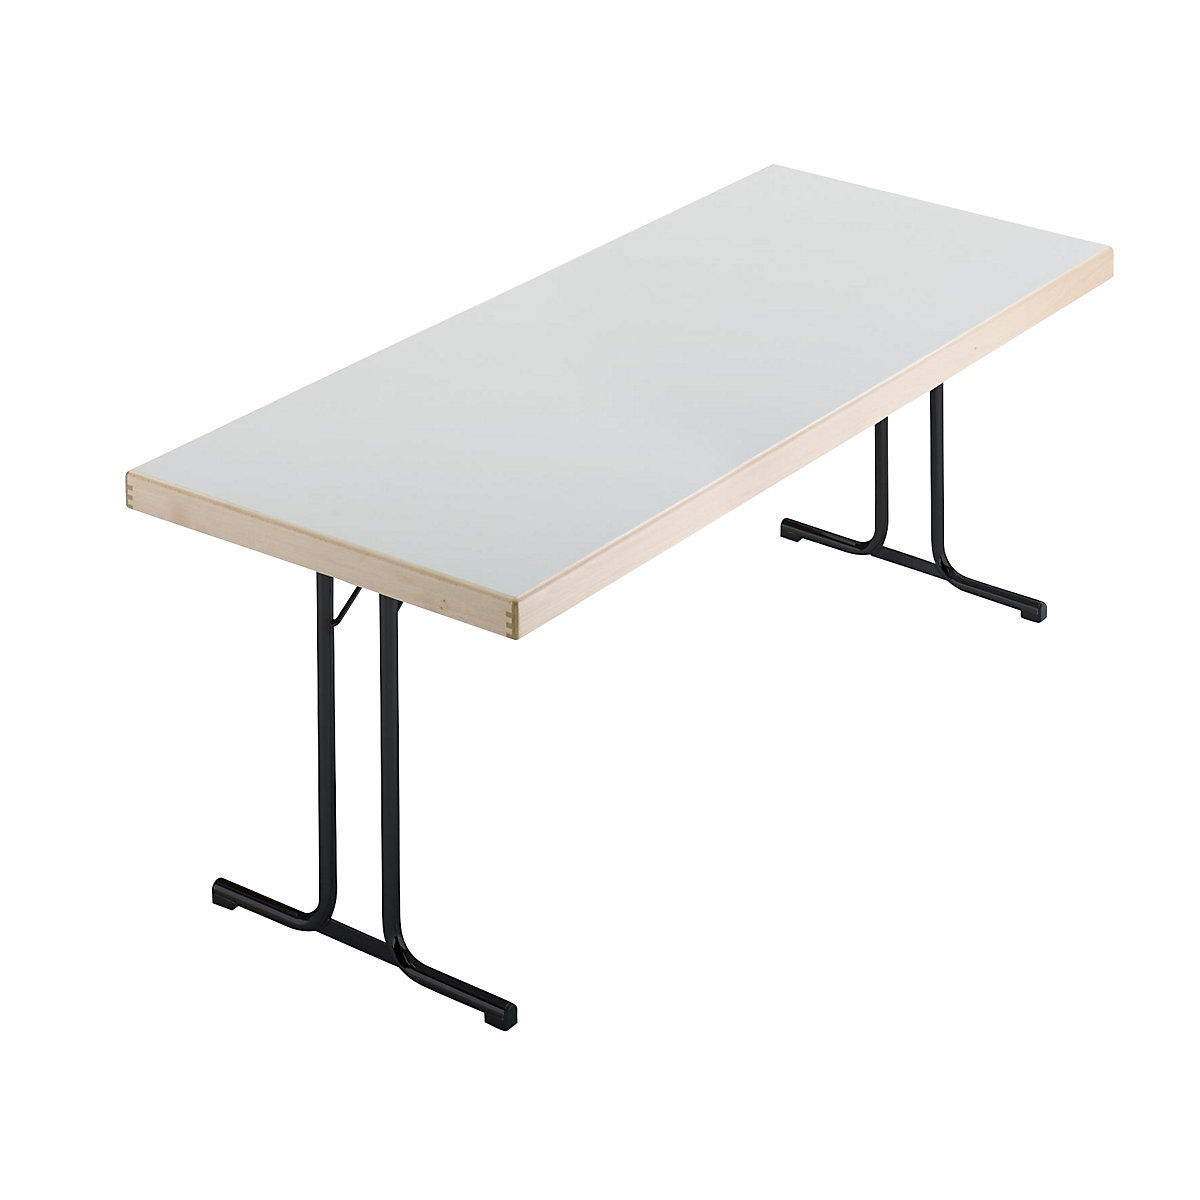 Sklápací stôl, podstavec s dvojitými nohami tvaru T, 1500 x 800 mm, podstavec antracitová, doska svetlošedá-9